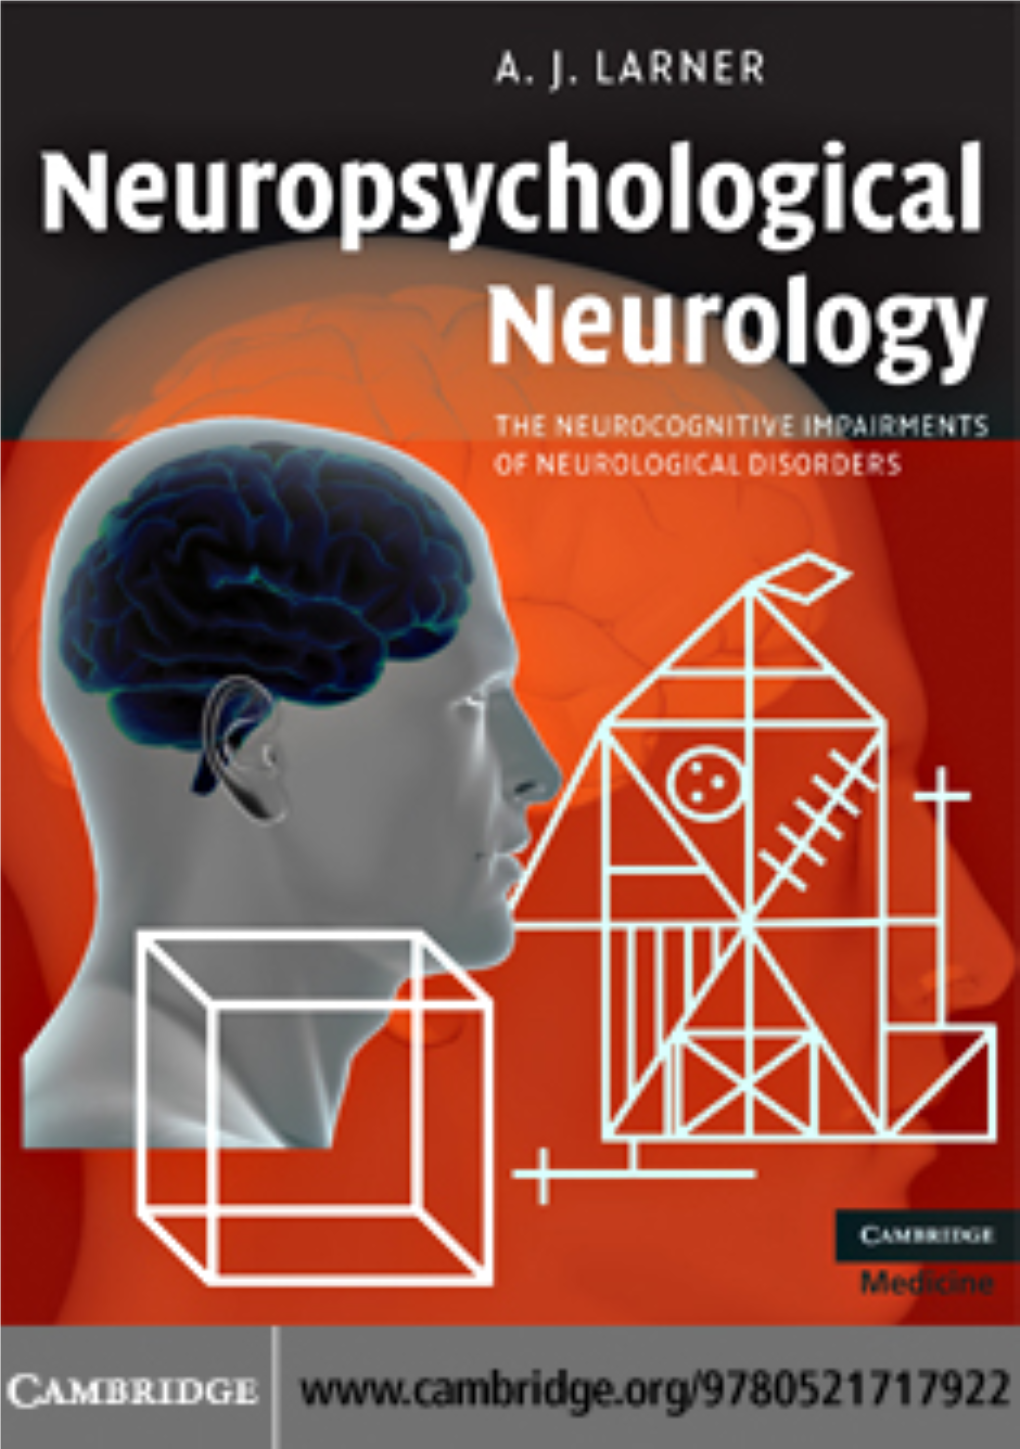 Neuropsychological Neurology the Neurocognitive Impairments of Neurological Disorders